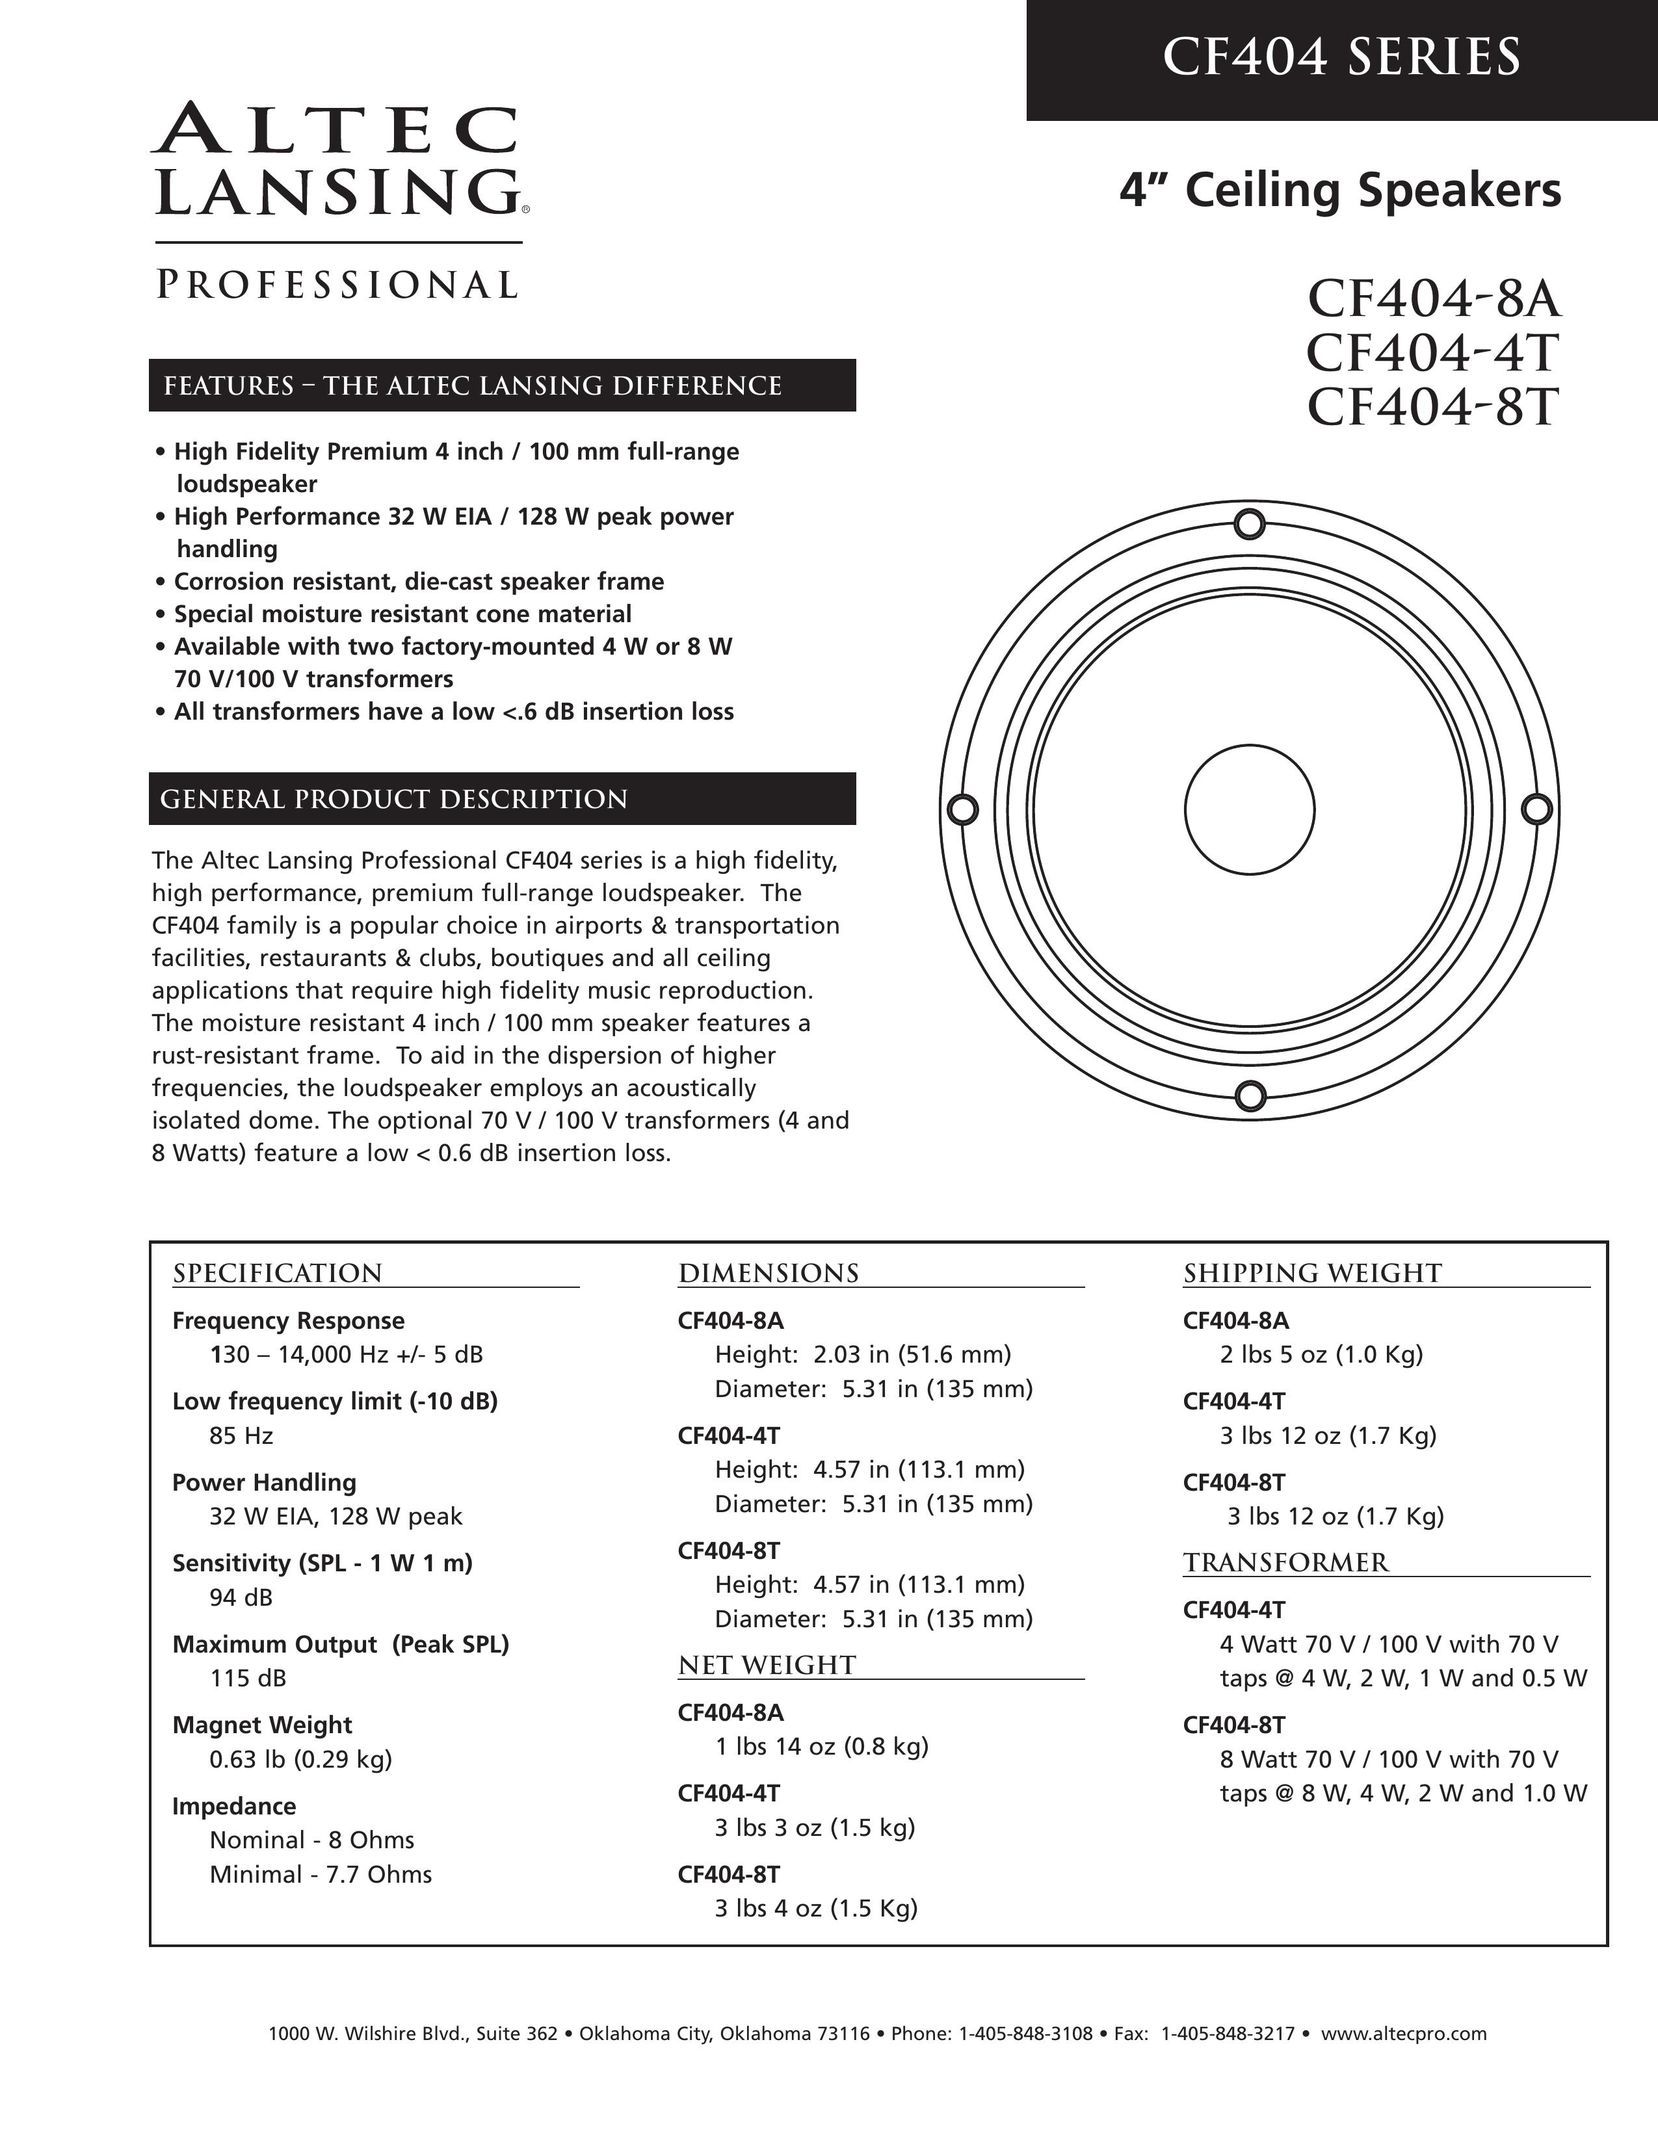 Altec Lansing CF404-8A Speaker User Manual